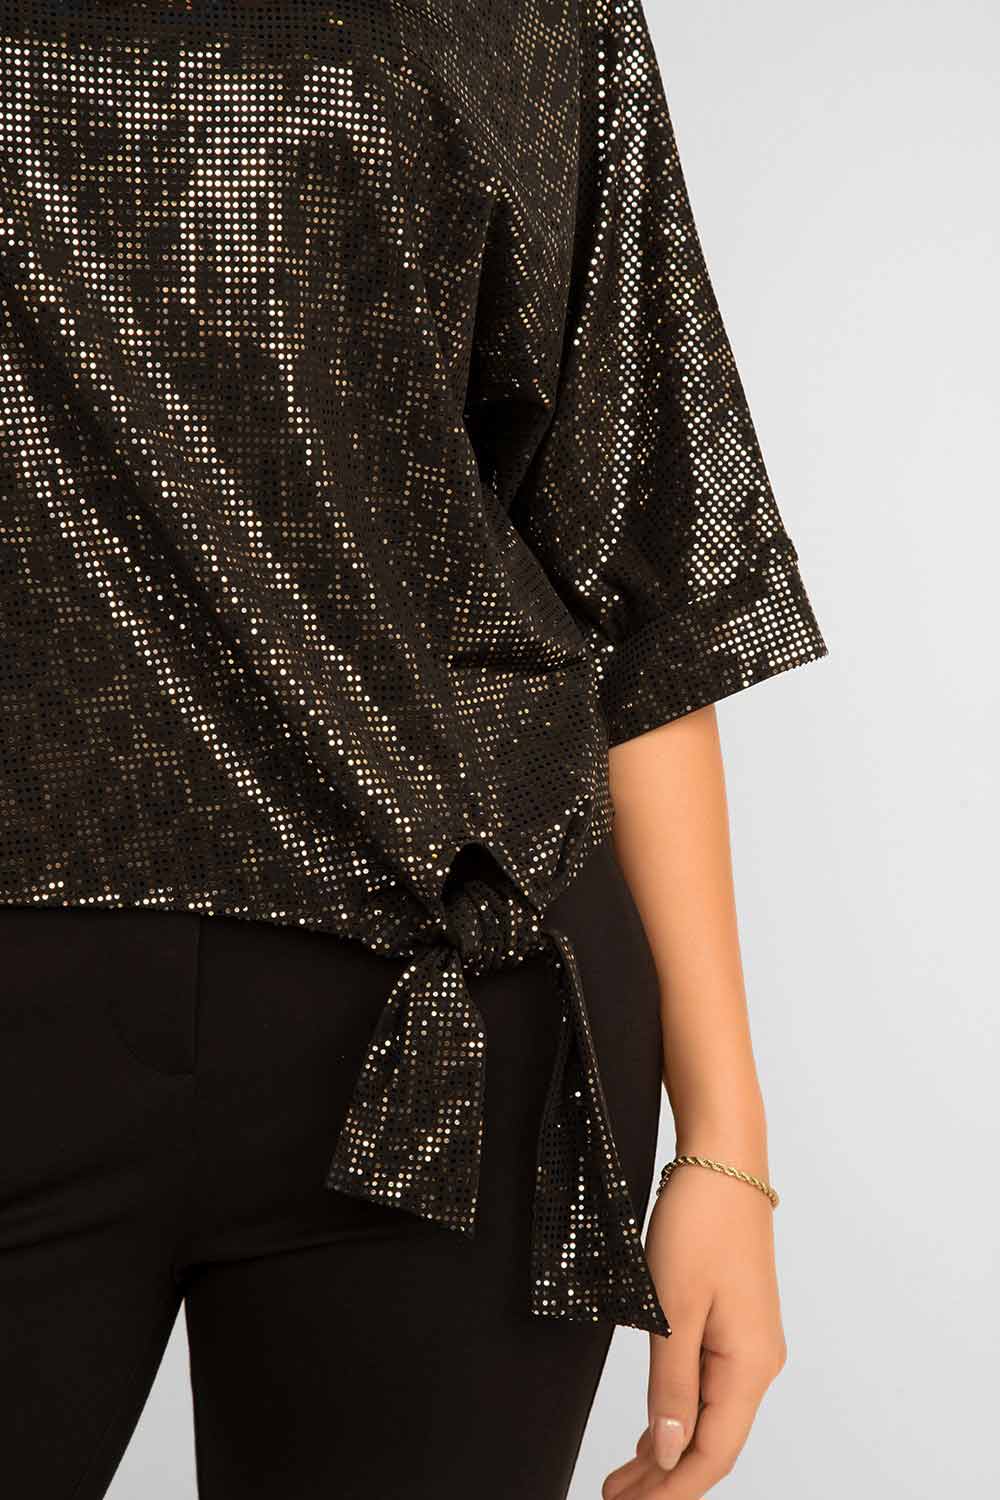 Women's Clothing FRANK LYMAN (234404) Animal Print Side Tie Blouse in BLACK/GOLD